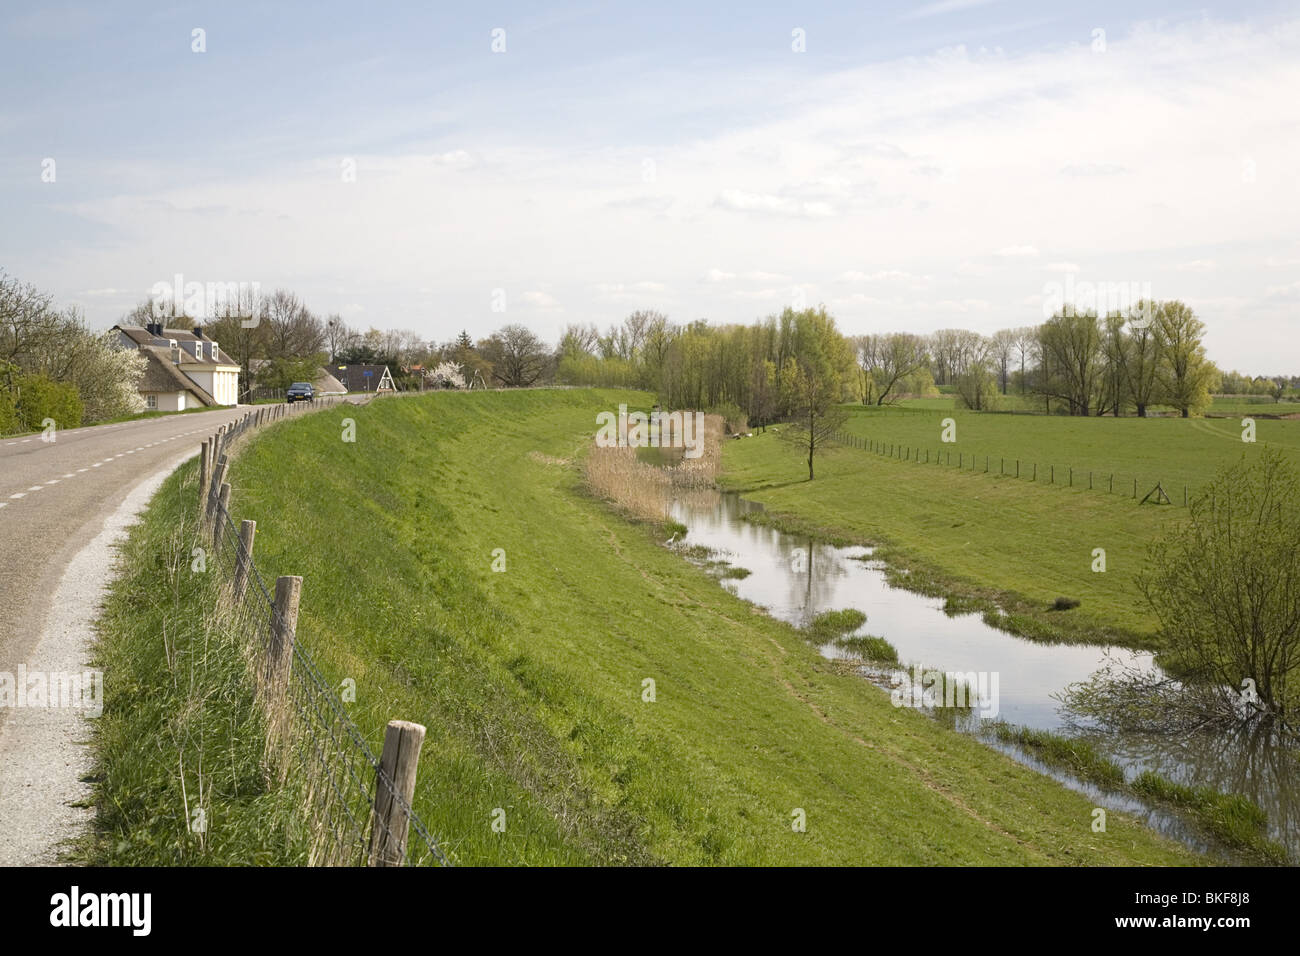 Rural landscape of the foreland and dike along the river Meuse, Wellseind, Gelderland, Netherlands Stock Photo